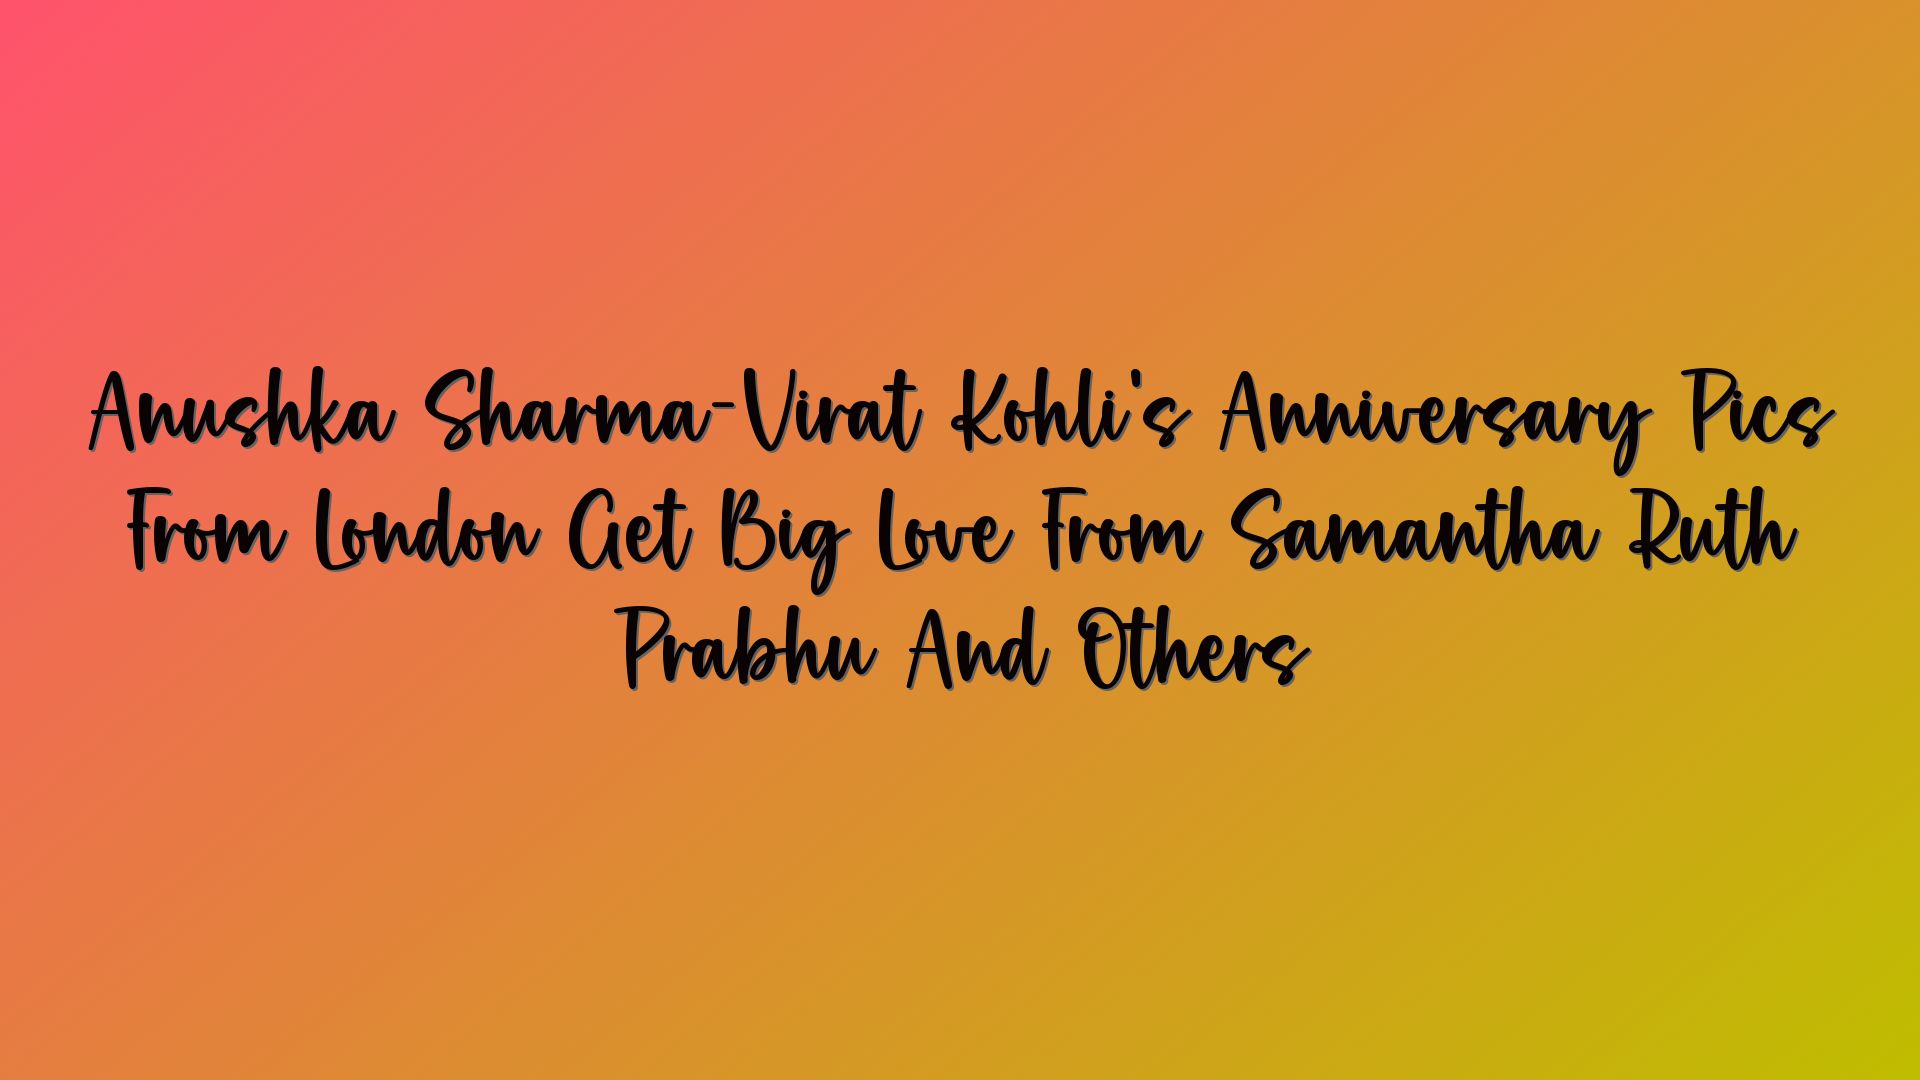 Anushka Sharma-Virat Kohli’s Anniversary Pics From London Get Big Love From Samantha Ruth Prabhu And Others